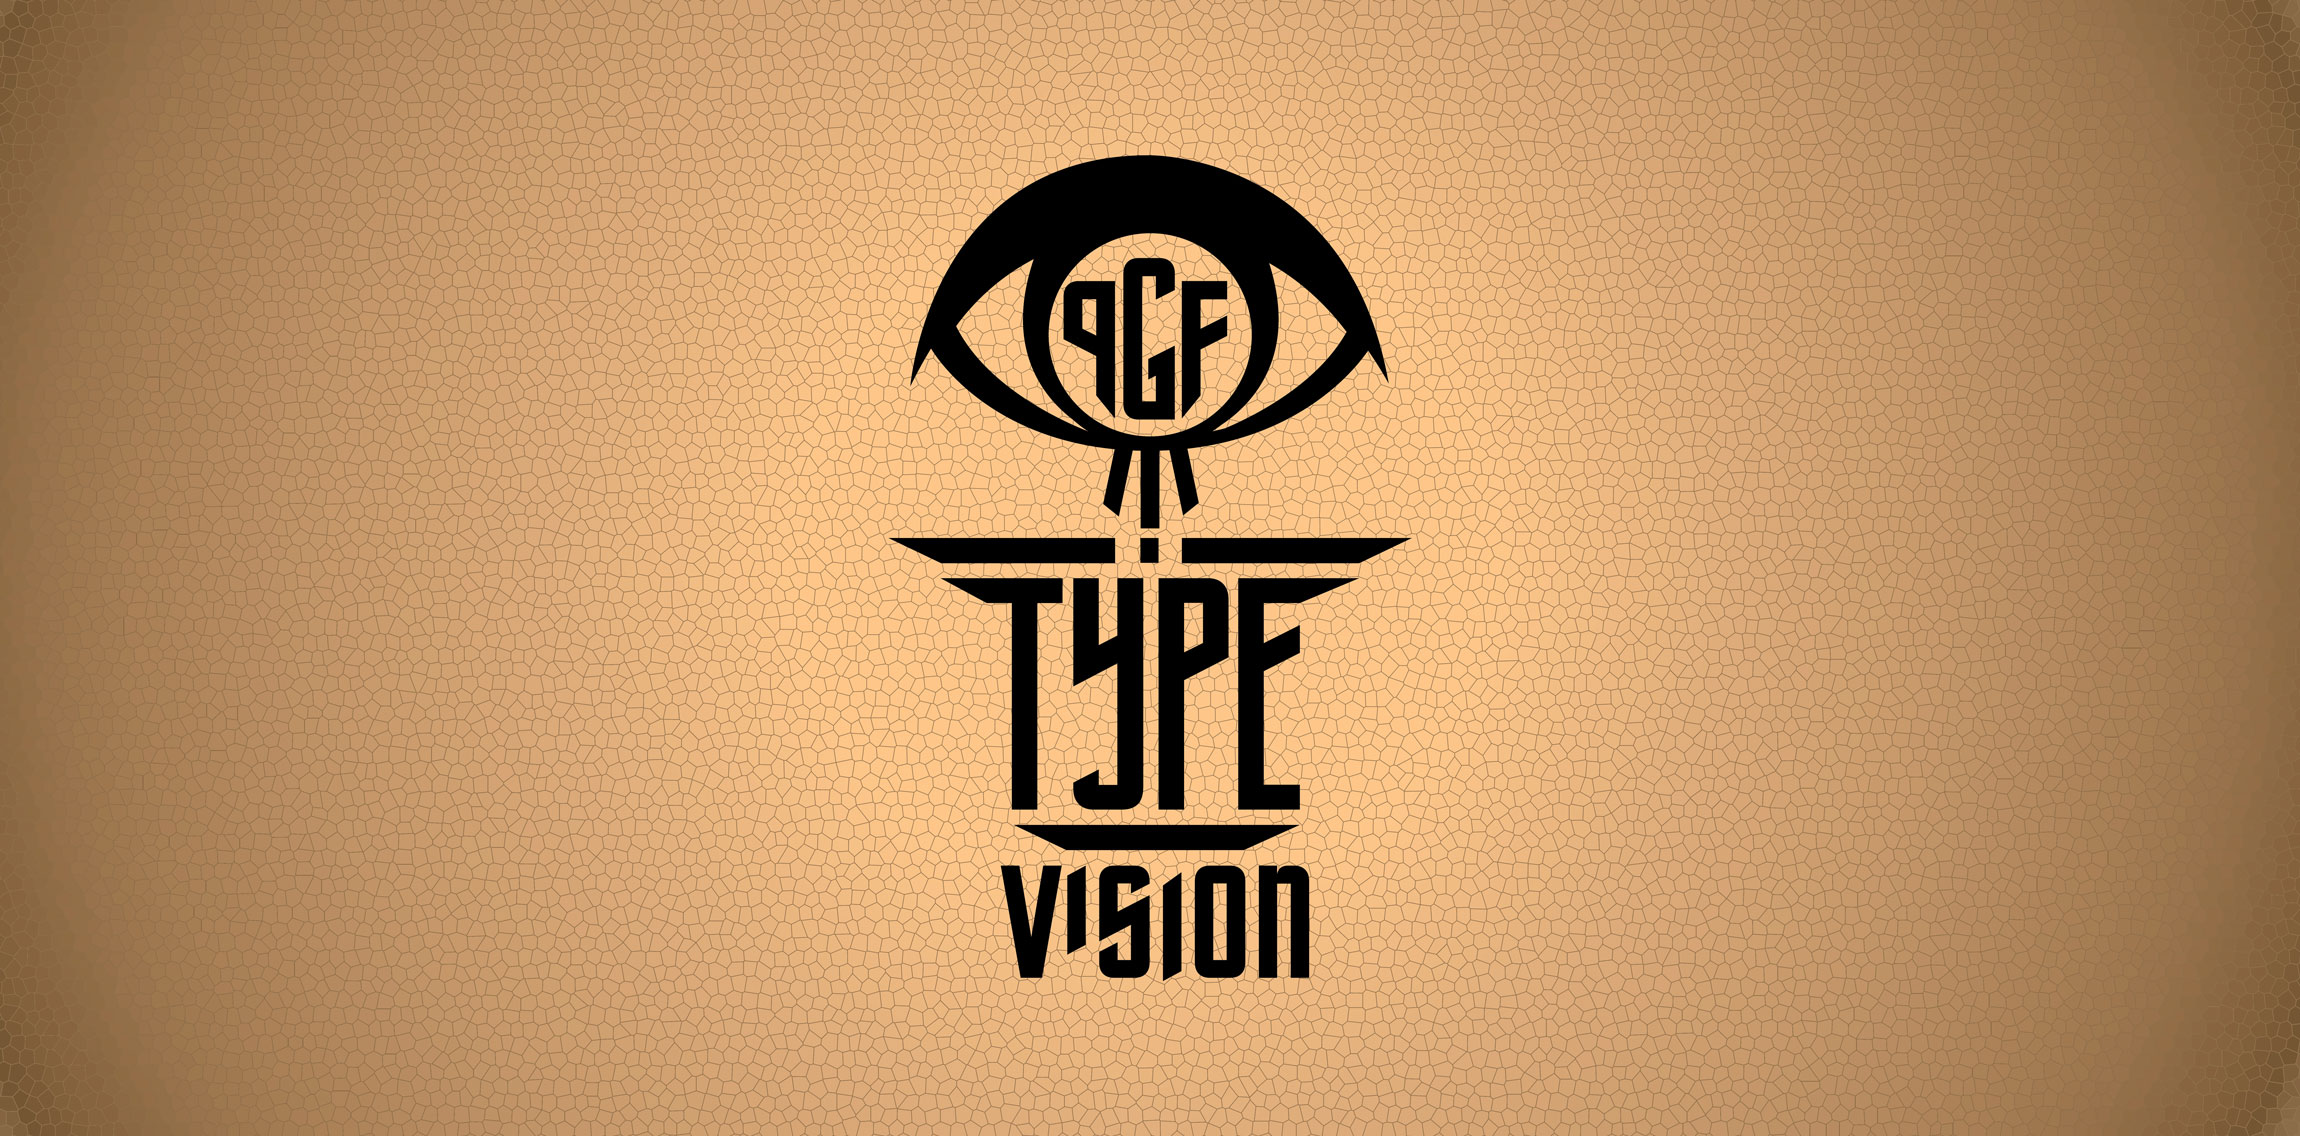 Type Vision